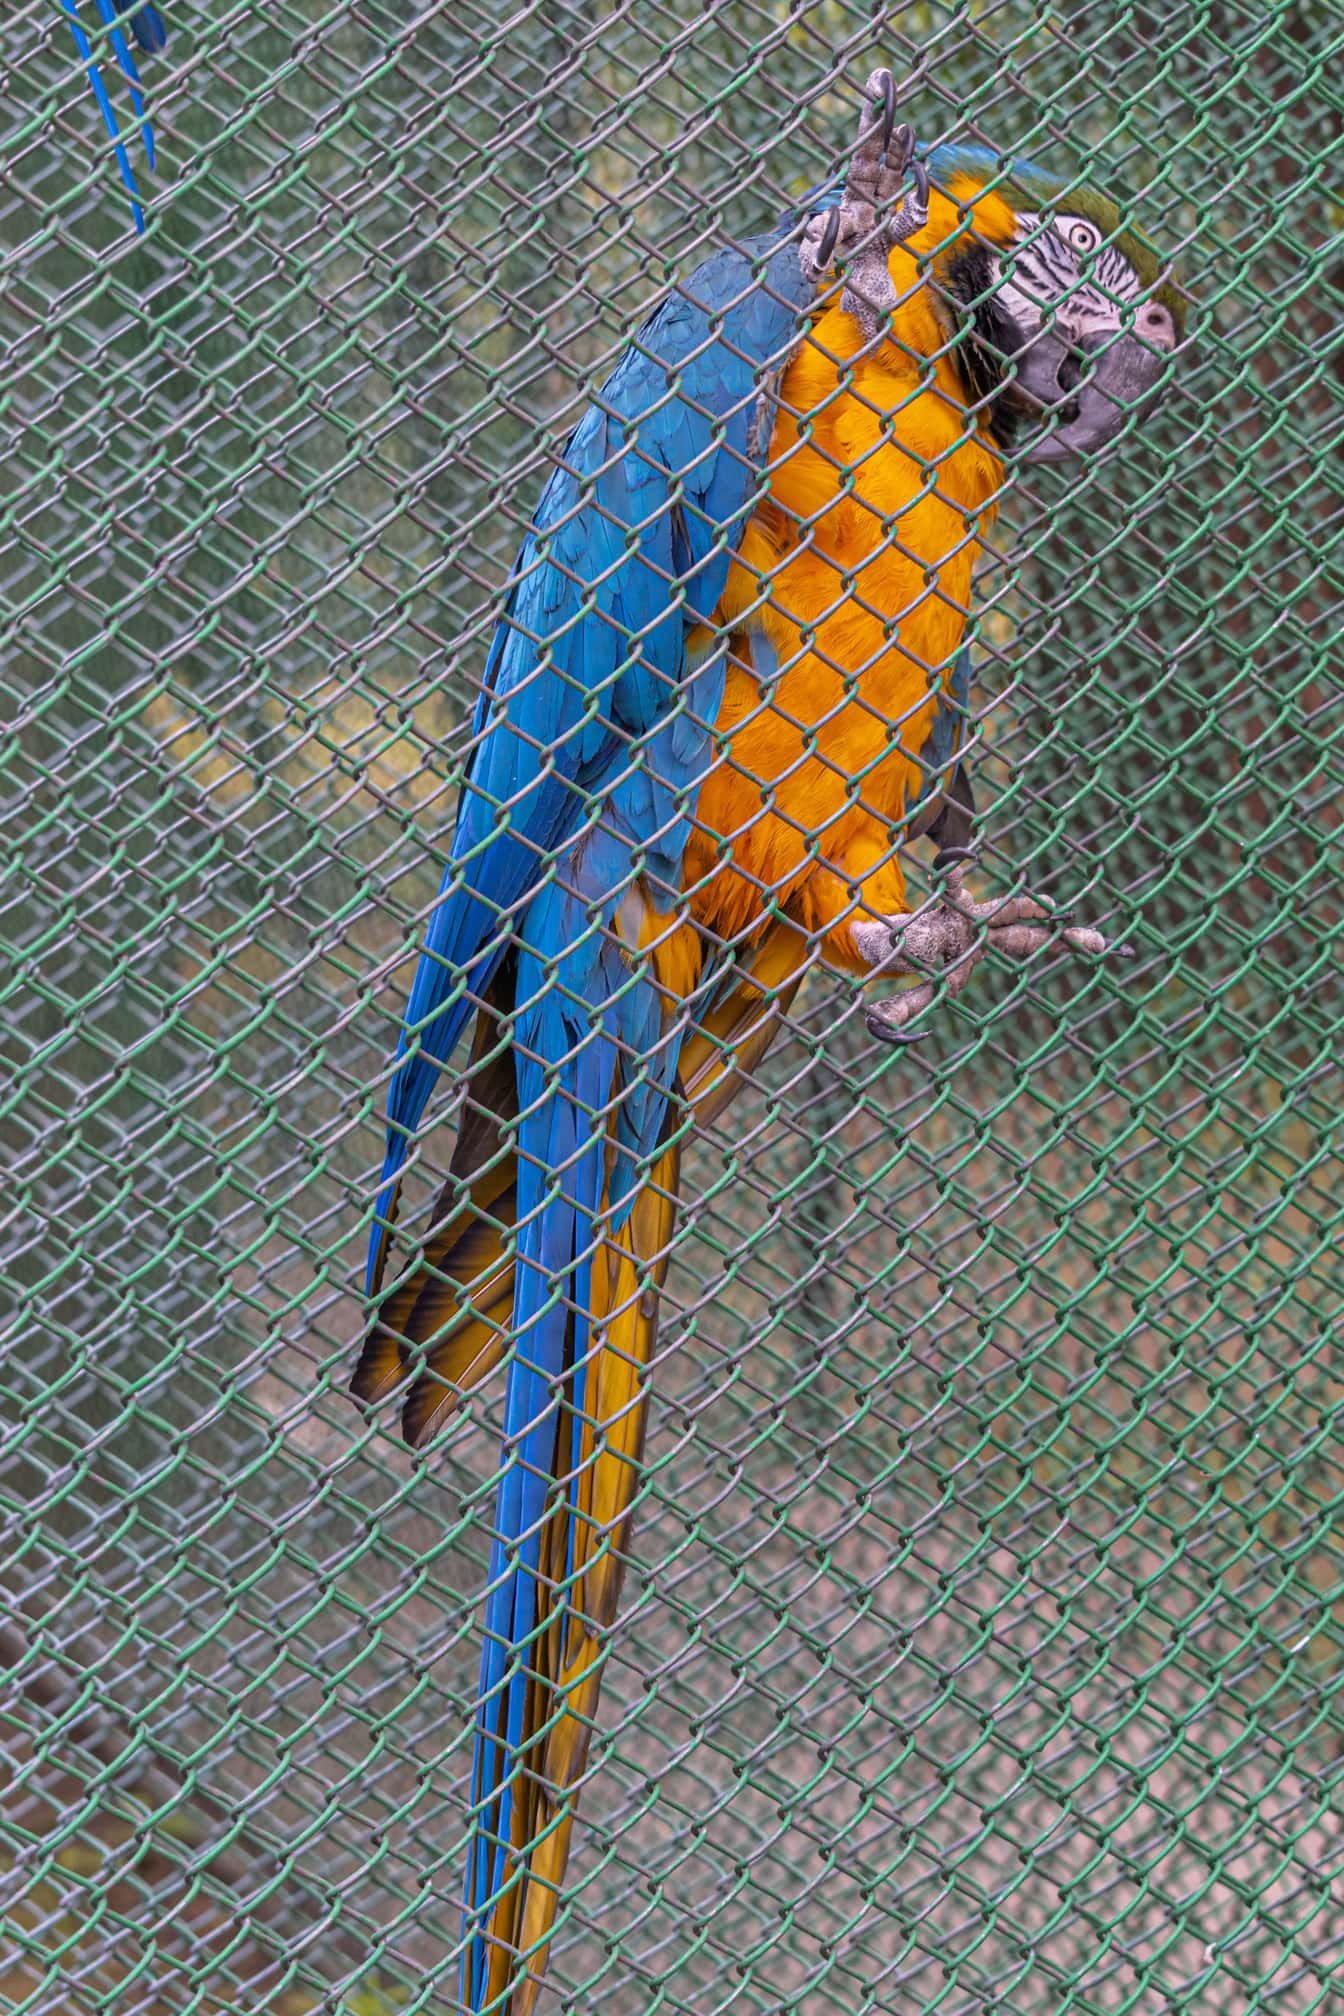 Hayvanat bahçesinde kafeste mavi-altın Amerika papağanı (Ara ararauna) papağan kuşu